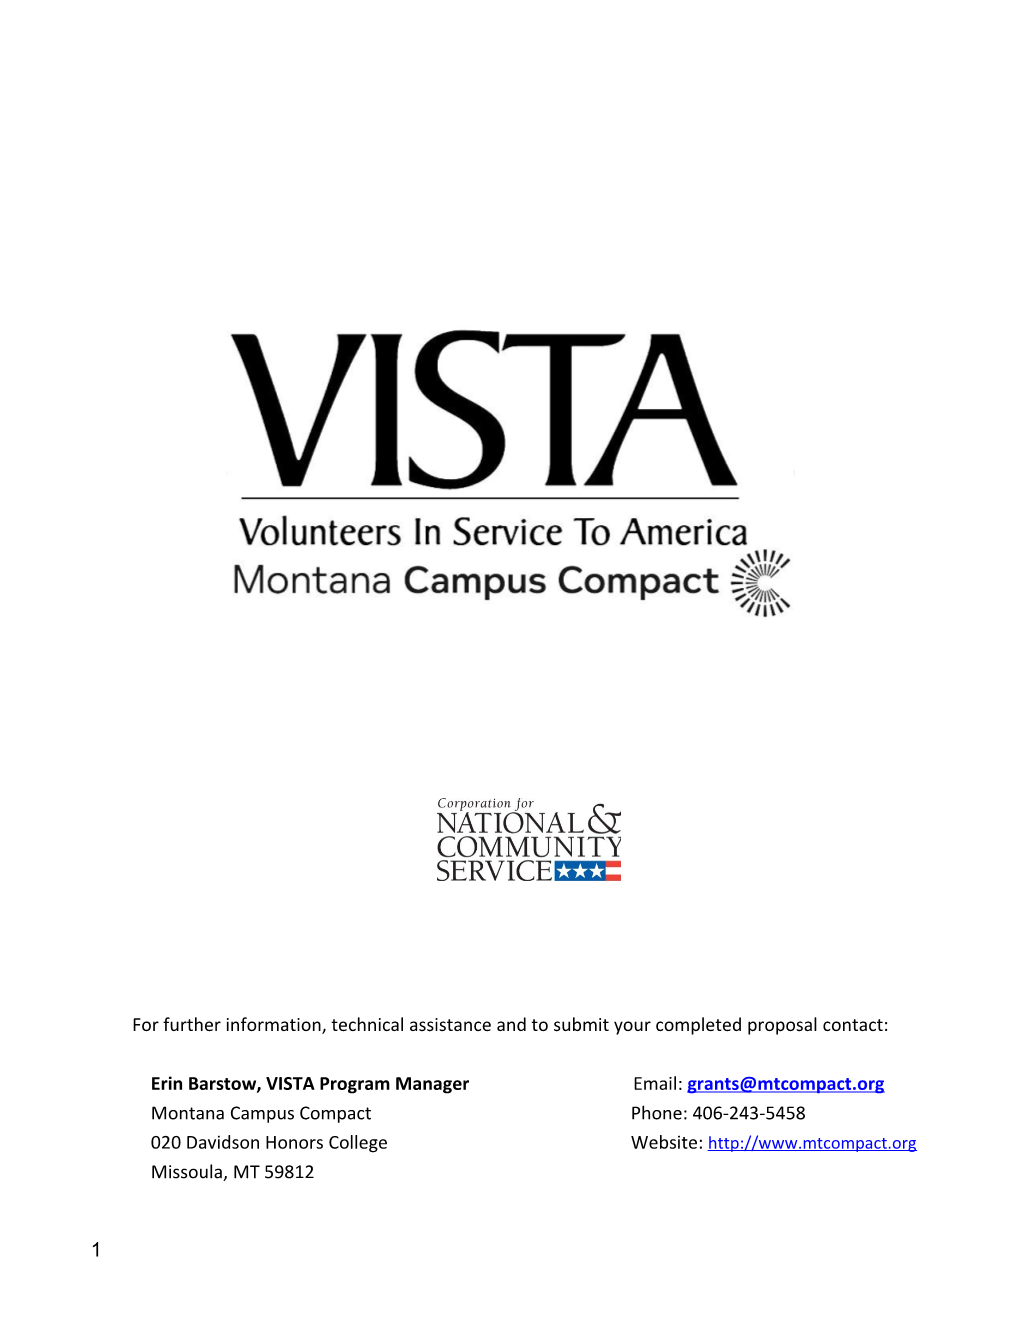 Americorps*VISTA Assignment Description (VAD)